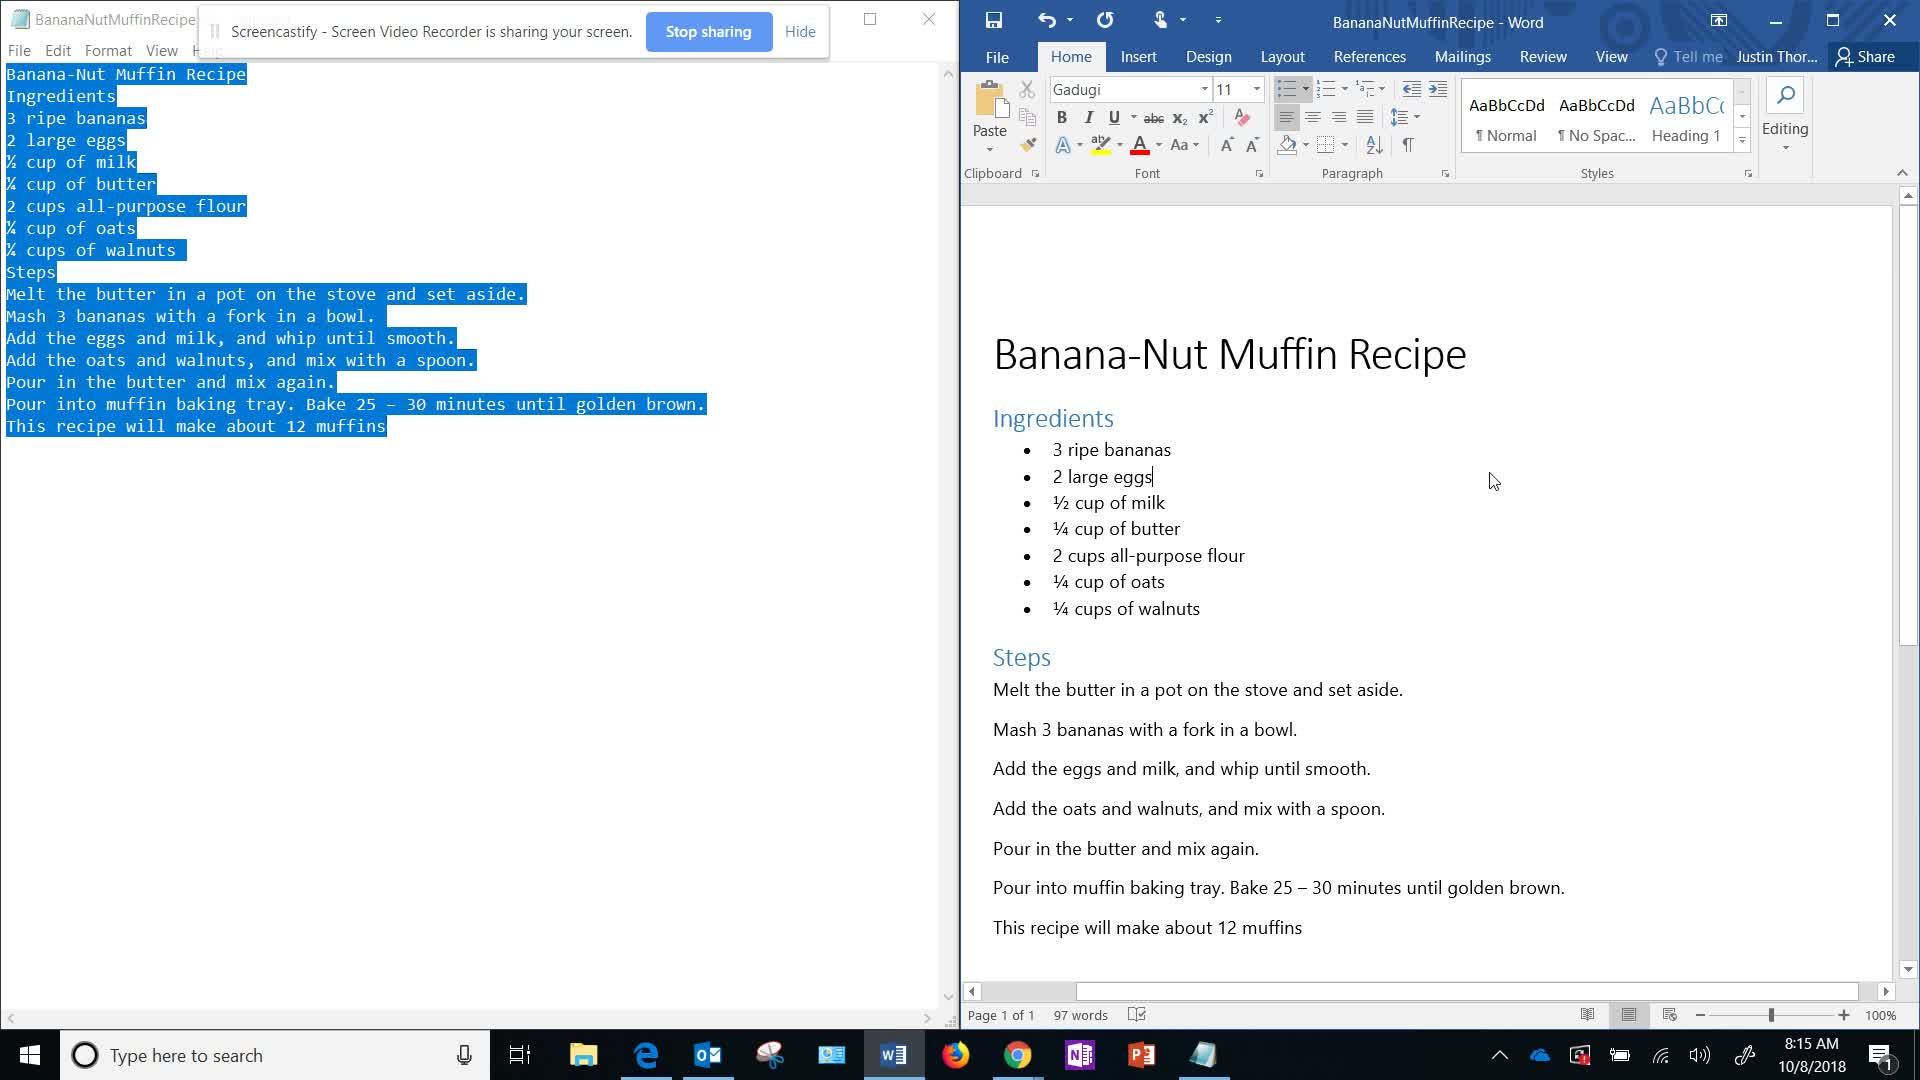 BananaNutMuffin Instructions